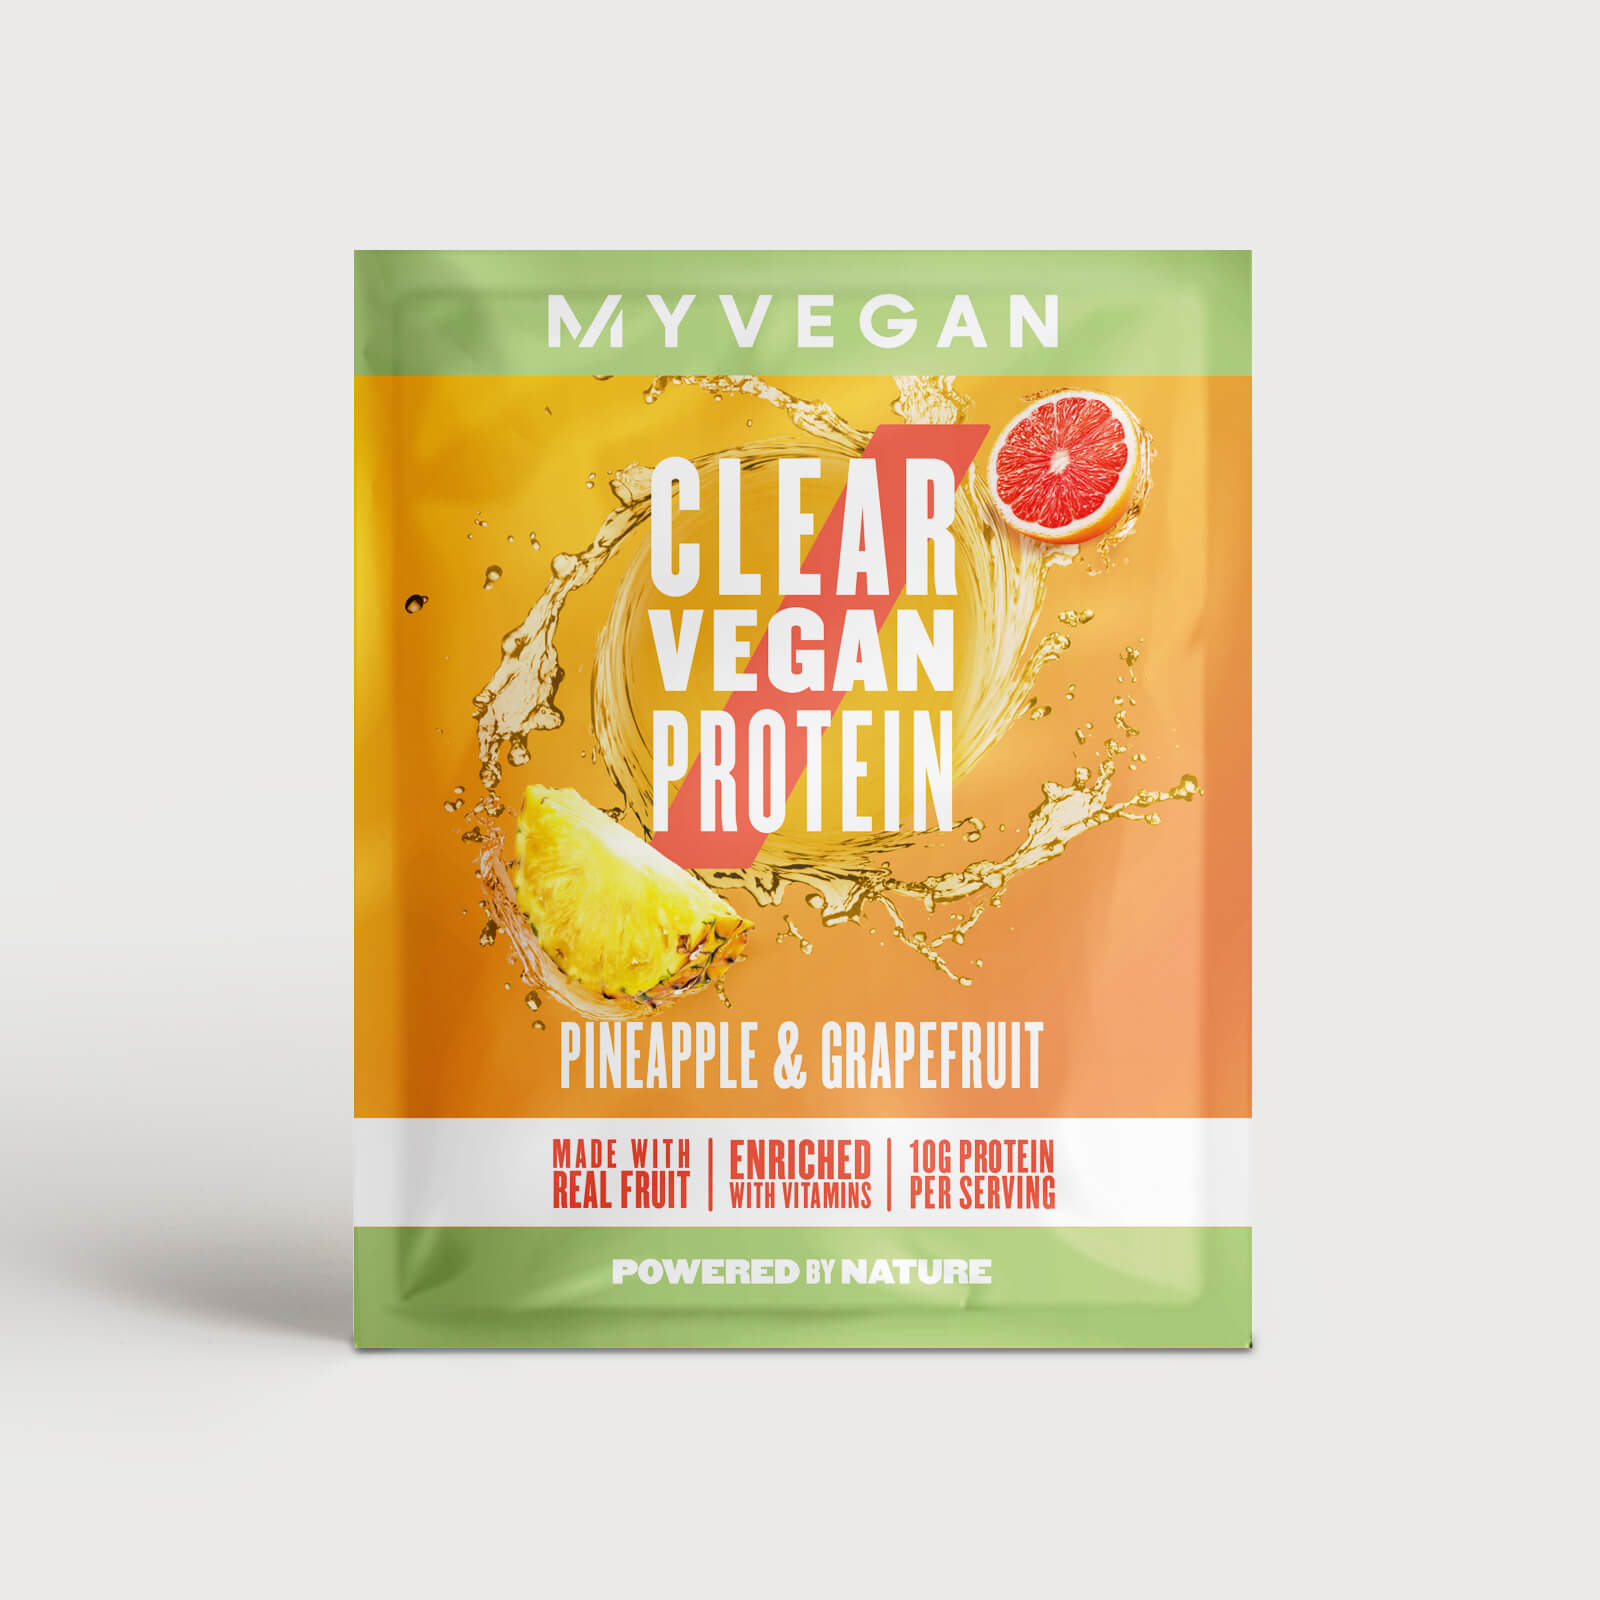 Myvegan Clear Vegan Protein (Sample) - 16g - Pineapple & Grapefruit